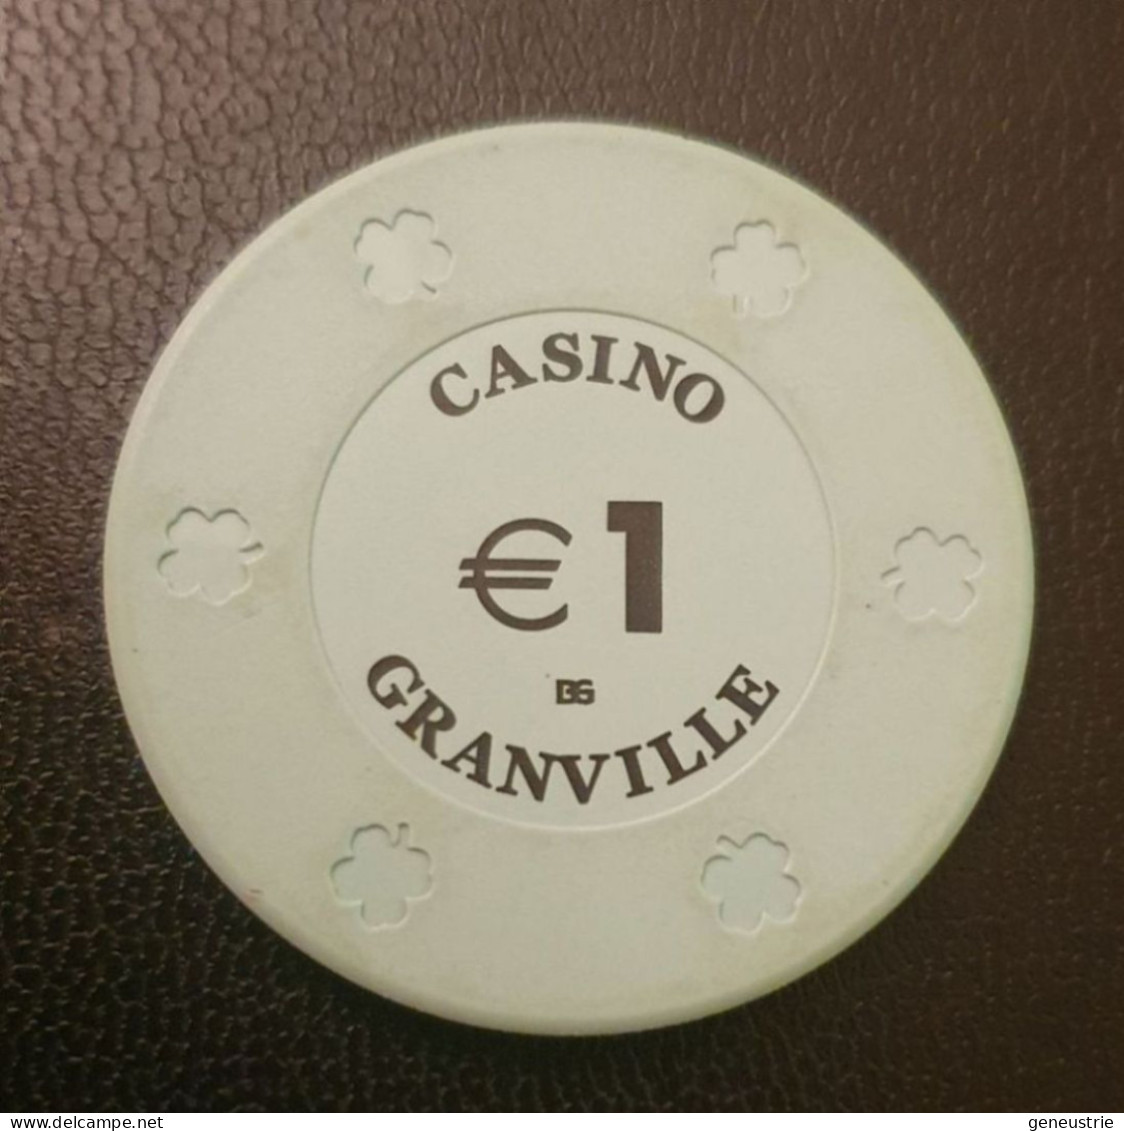 Jeton De Jeu De 1 Euro "Casino De Granville - €1" Manche - Normandie - Casino